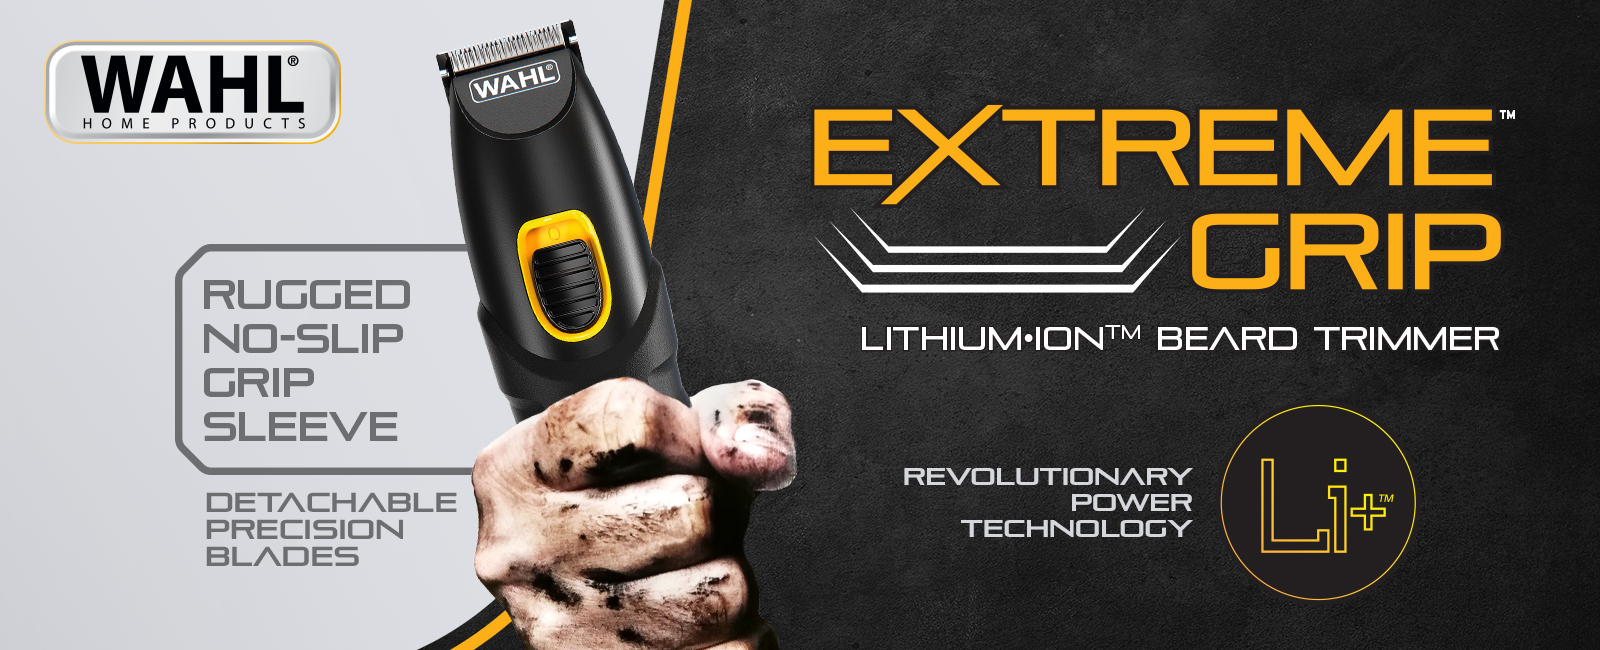 Wahl | Extreme Grip Lithium-ion Trimmer | Shaver Shop